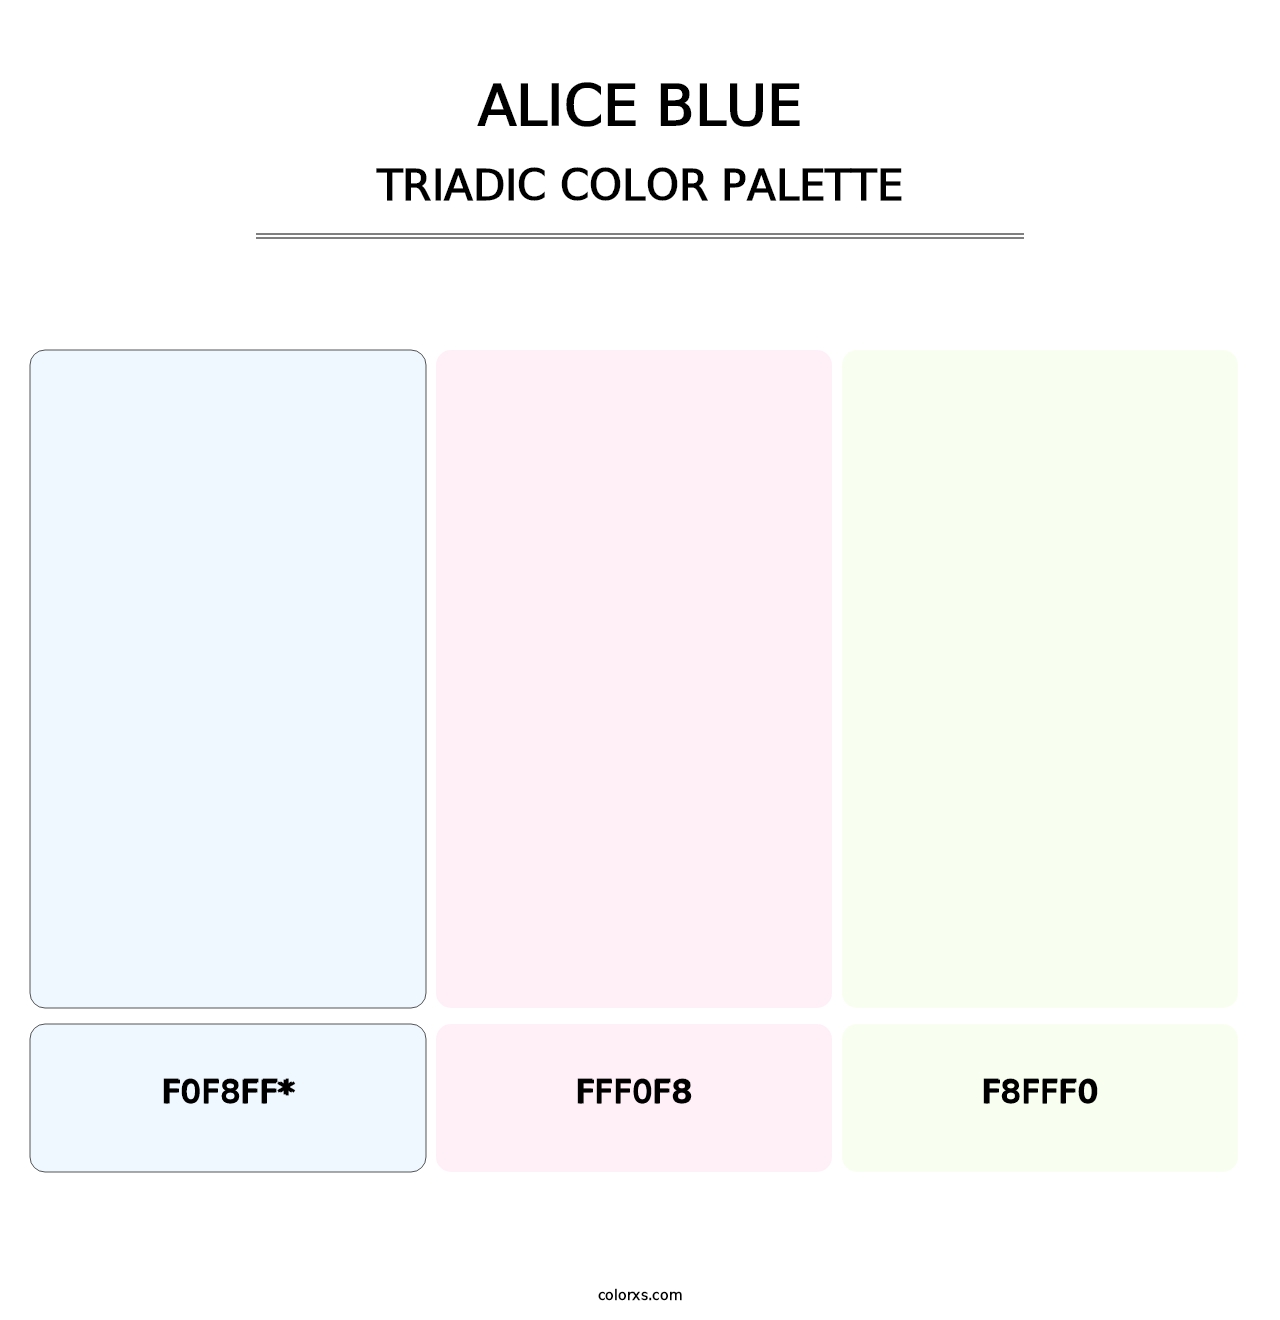 Alice blue - Triadic Color Palette